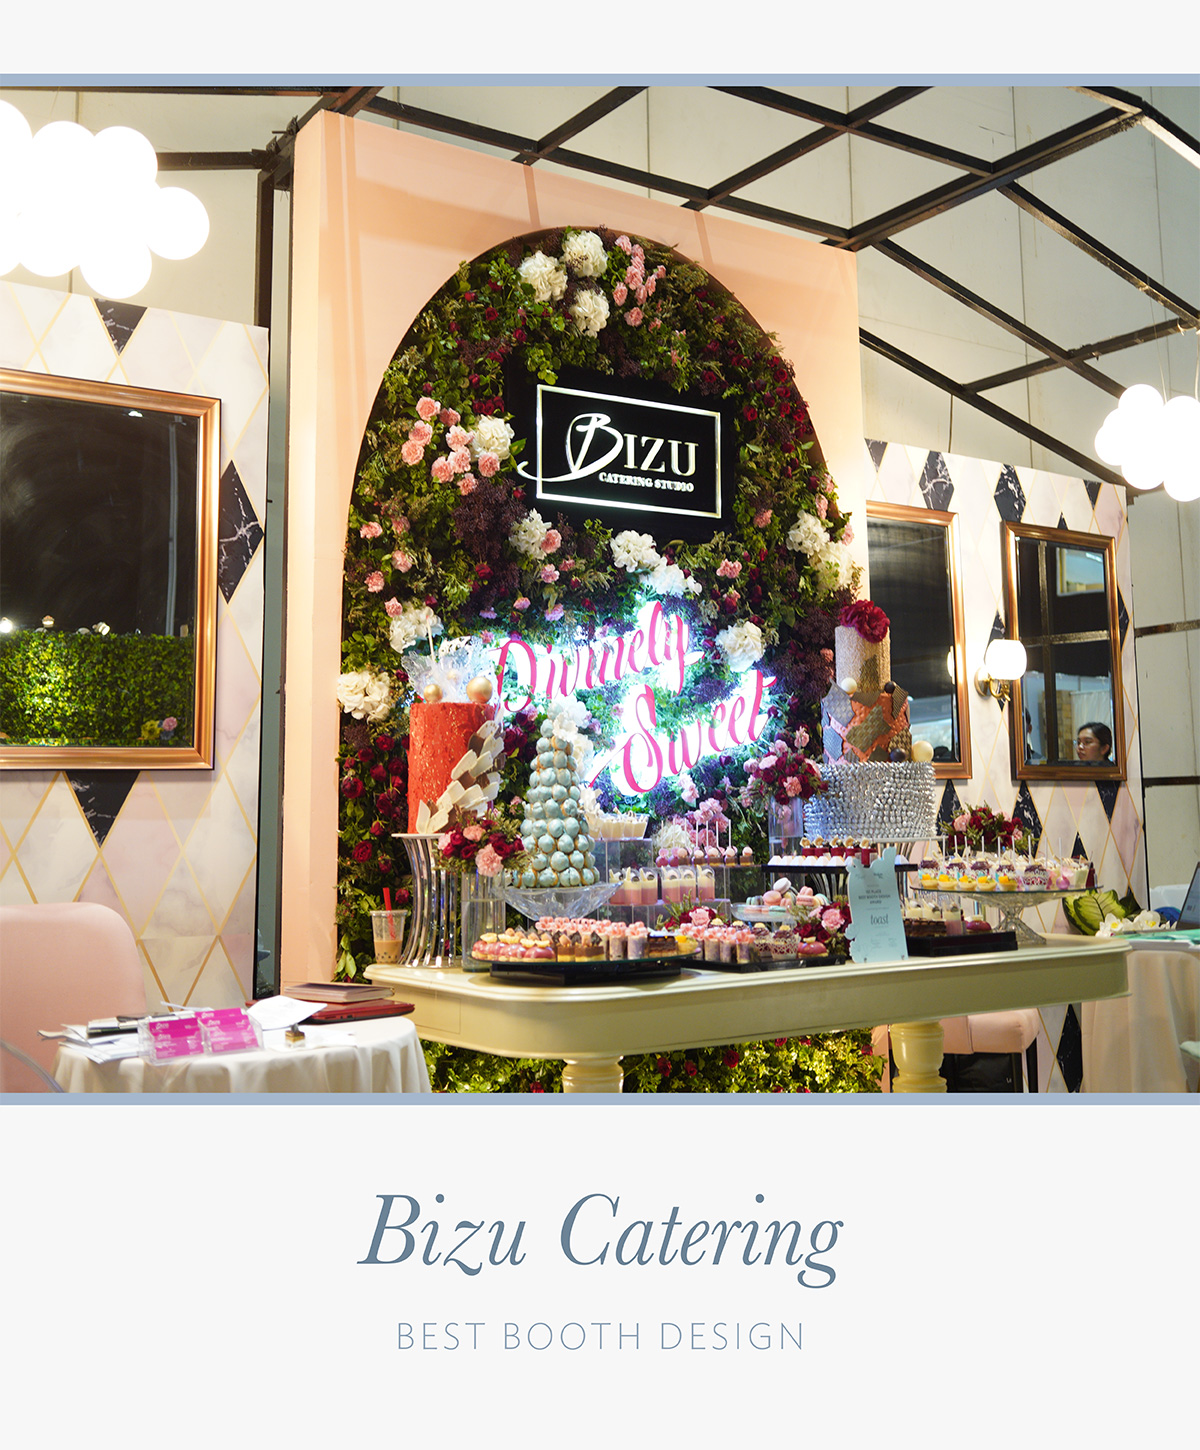 Bizu Catering: Best Booth Design